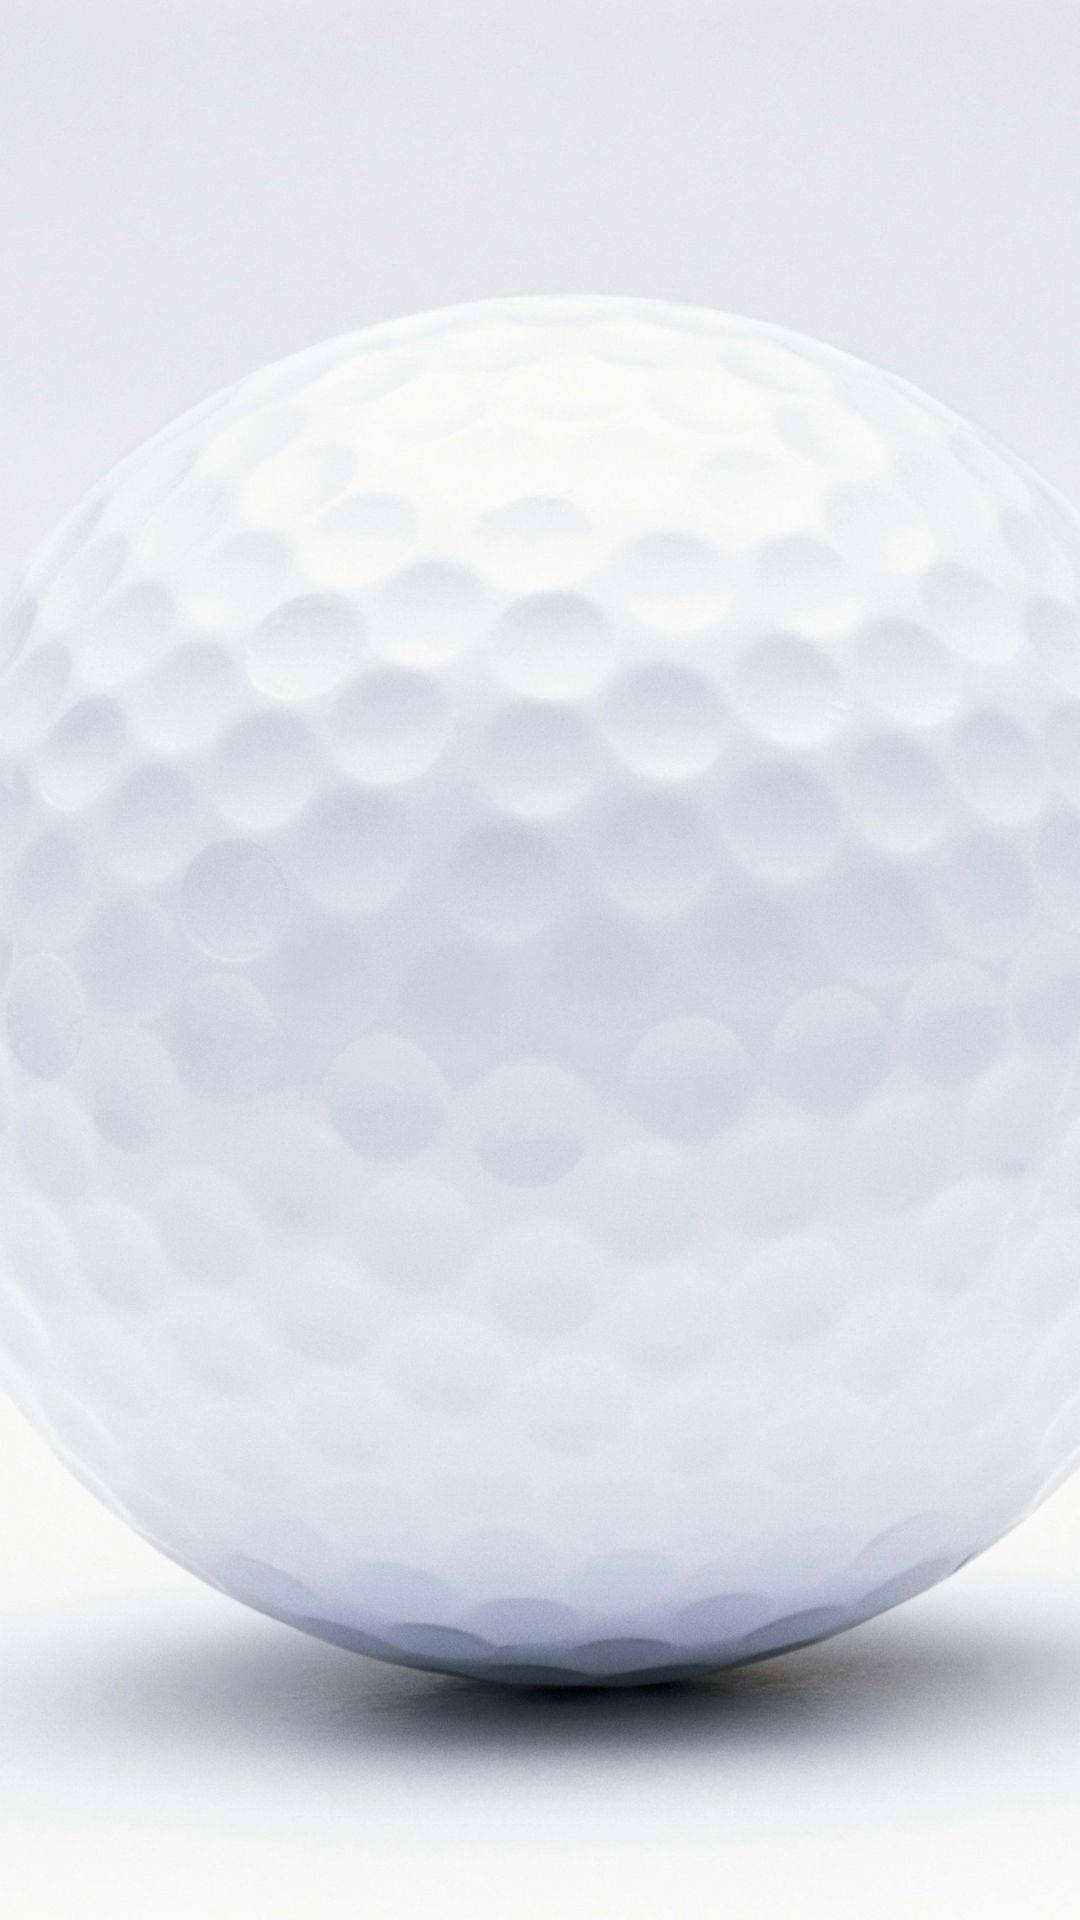 Beautifully Rendered Golf Ball for Desktop Wallpaper